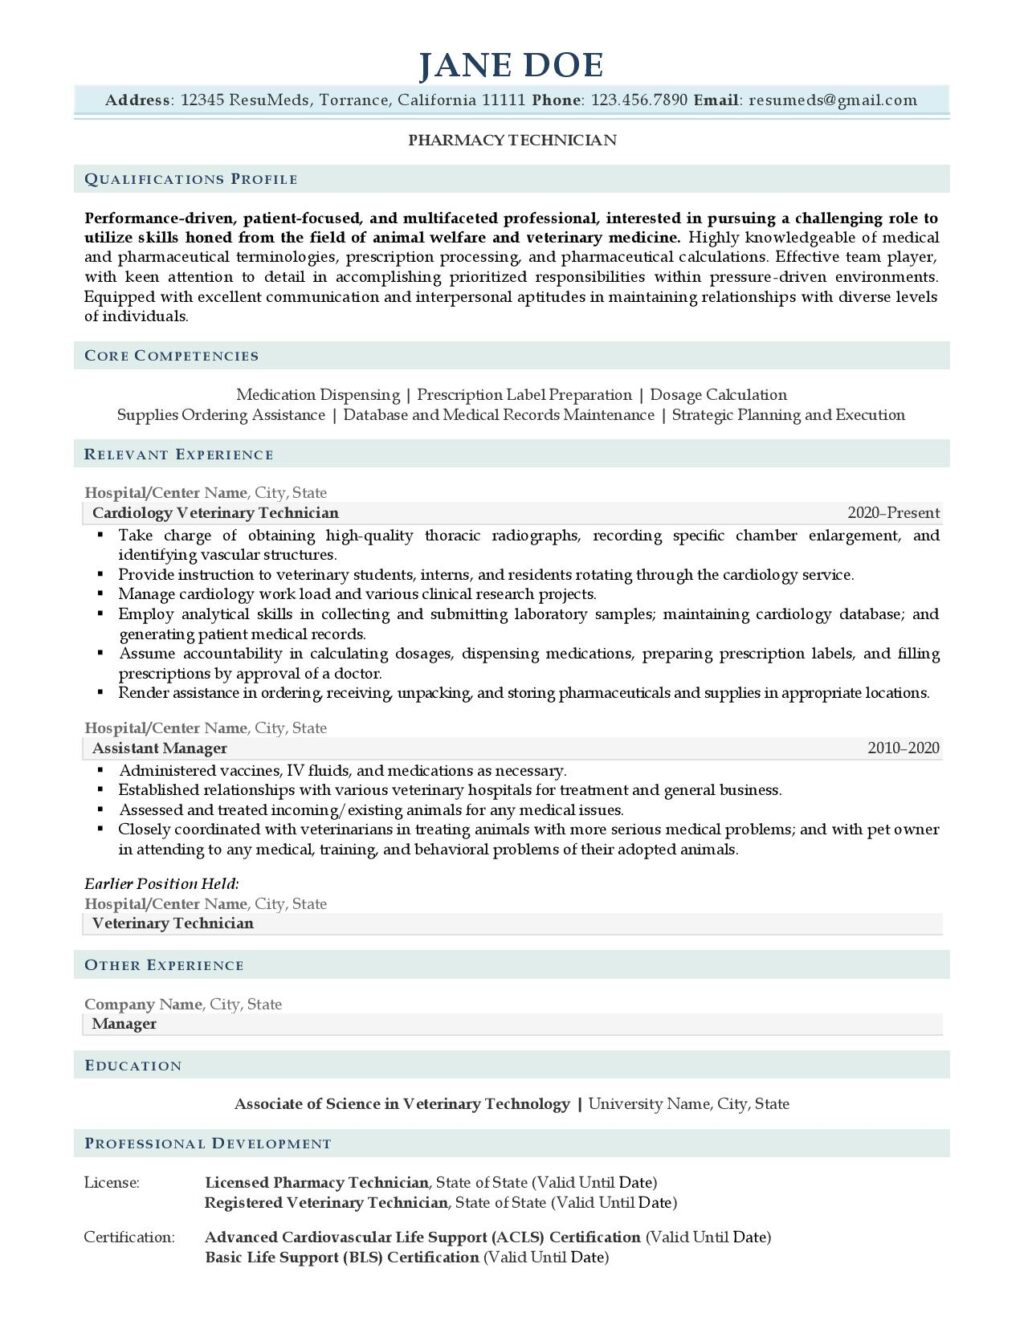 pharmacy technician resume example prepared by ResuMeds